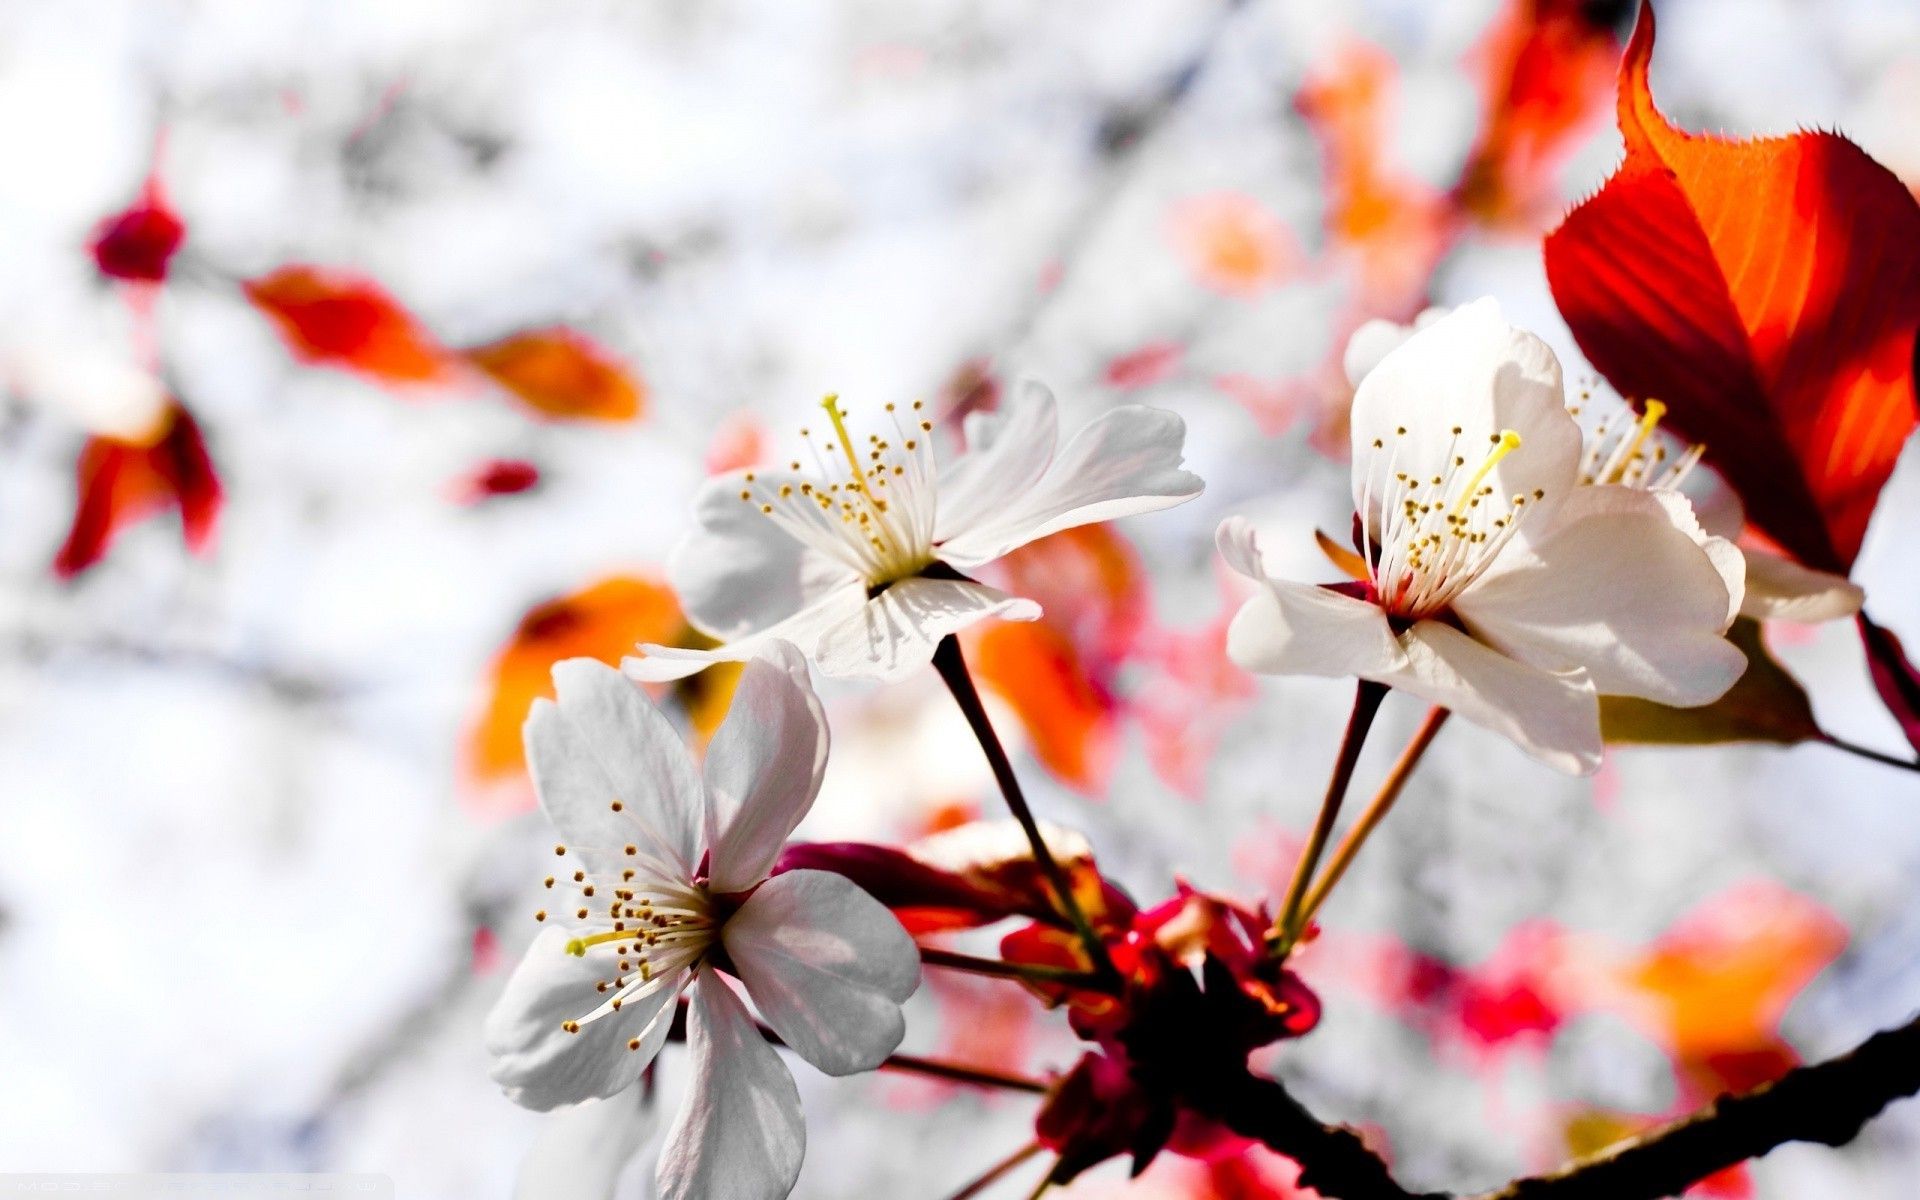 spring flowers cherry blossom wallpaper. Nature. Tokkoro.com Amazing HD Wallpaper